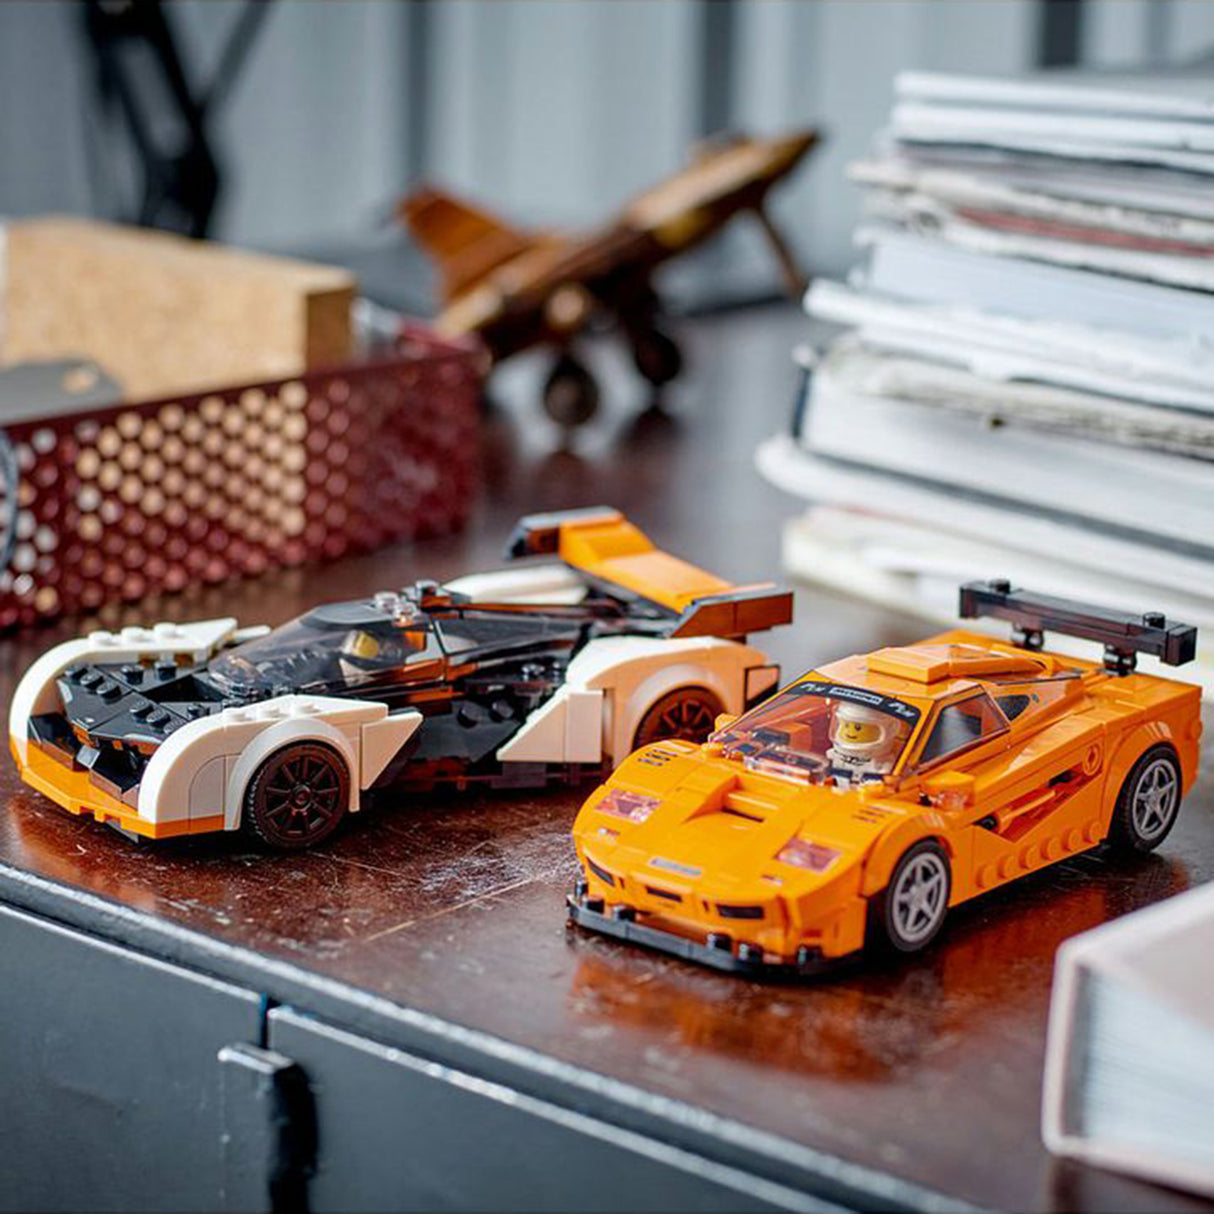 LEGO Speed Champions McLaren Solus GT and McLaren F1 LM 76918 (581 pieces)